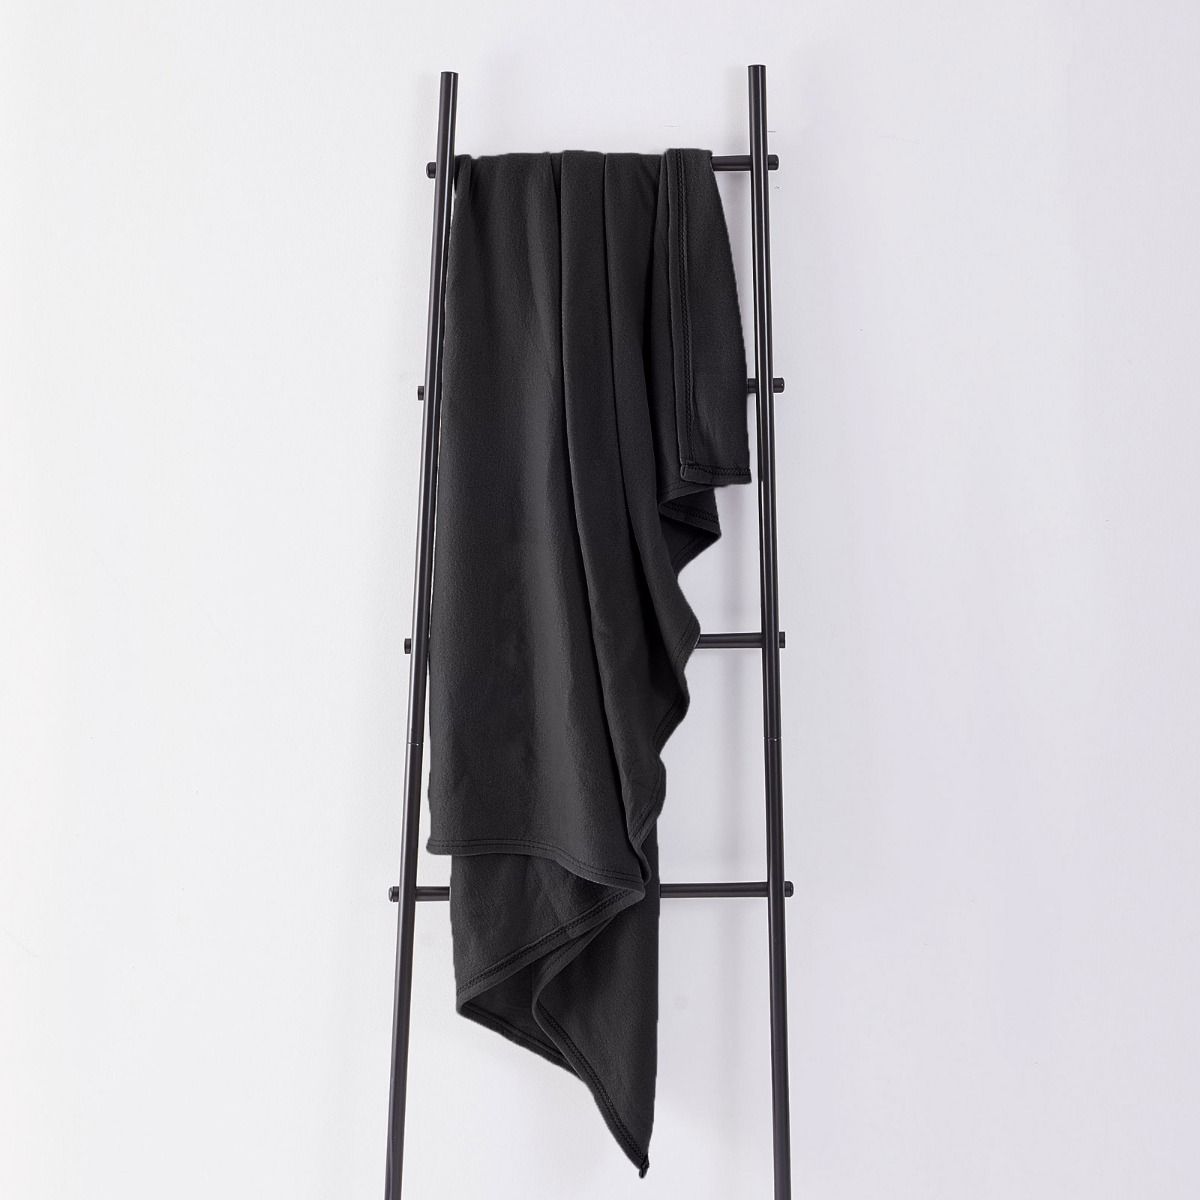 Fleece Blanket 120x150cm - Black